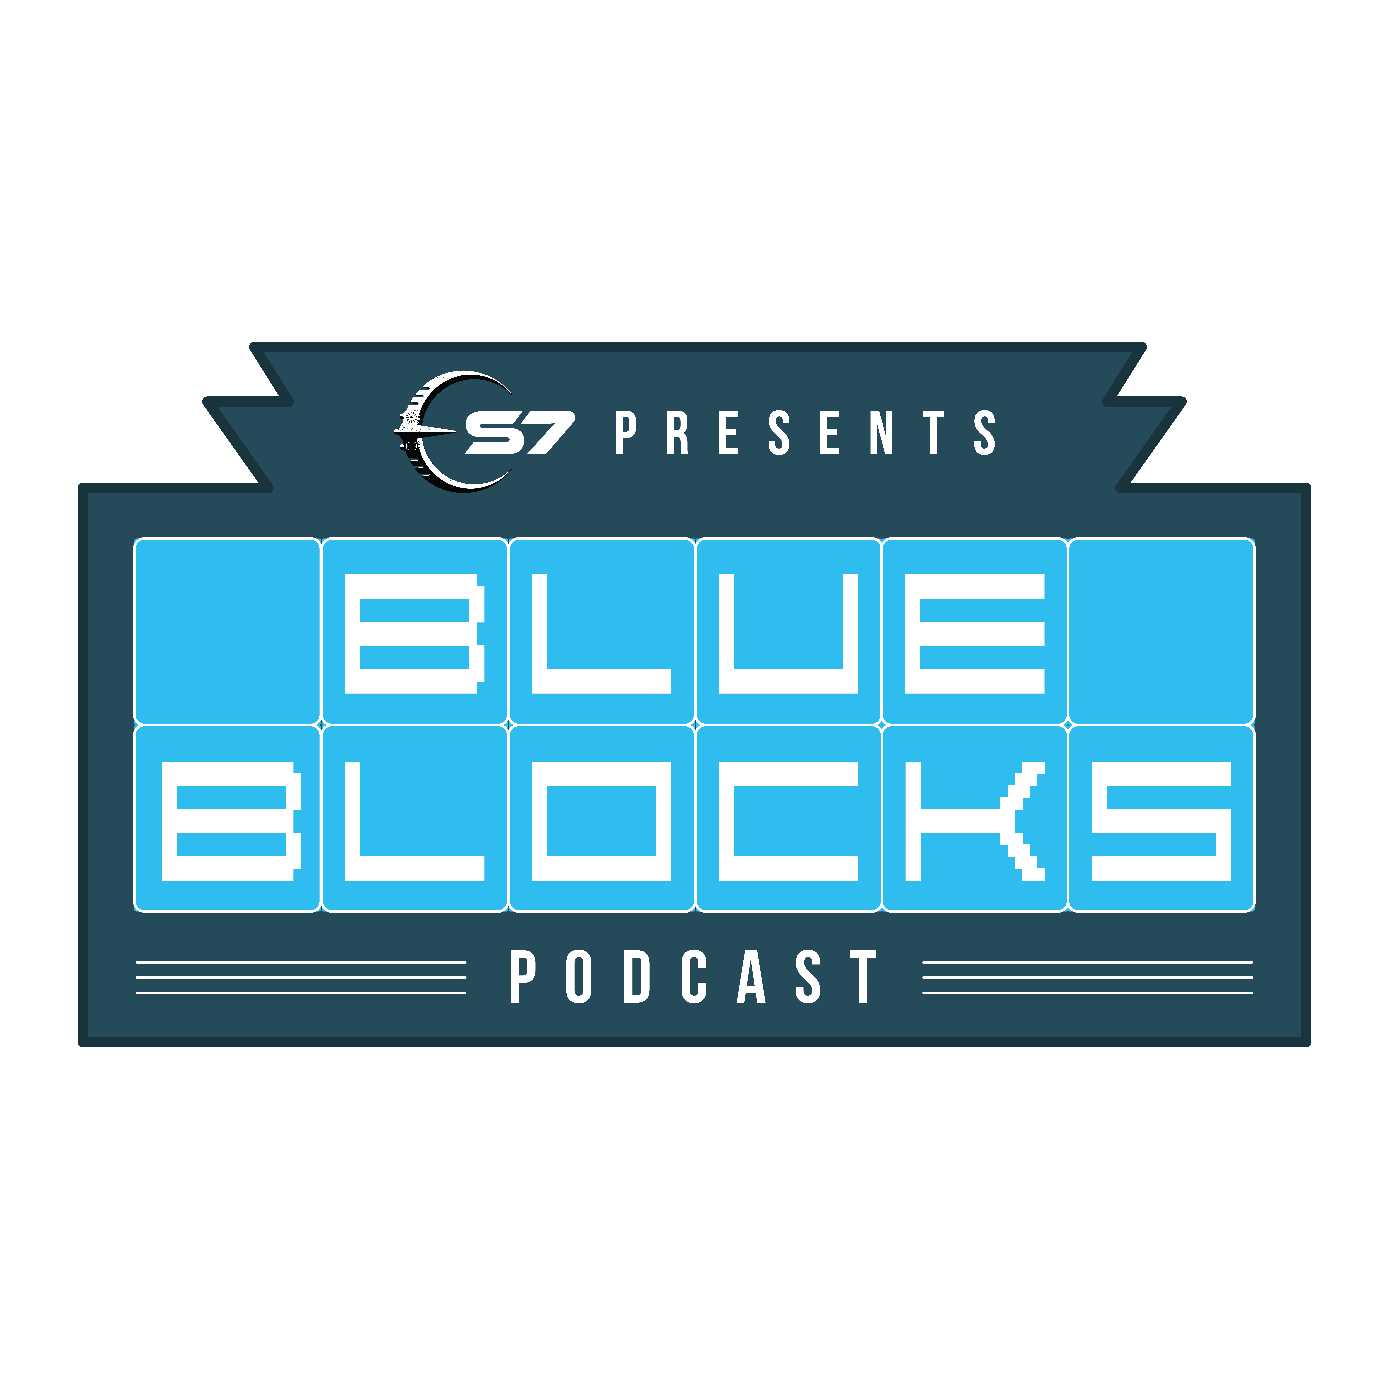 The Blue Blocks Podcast